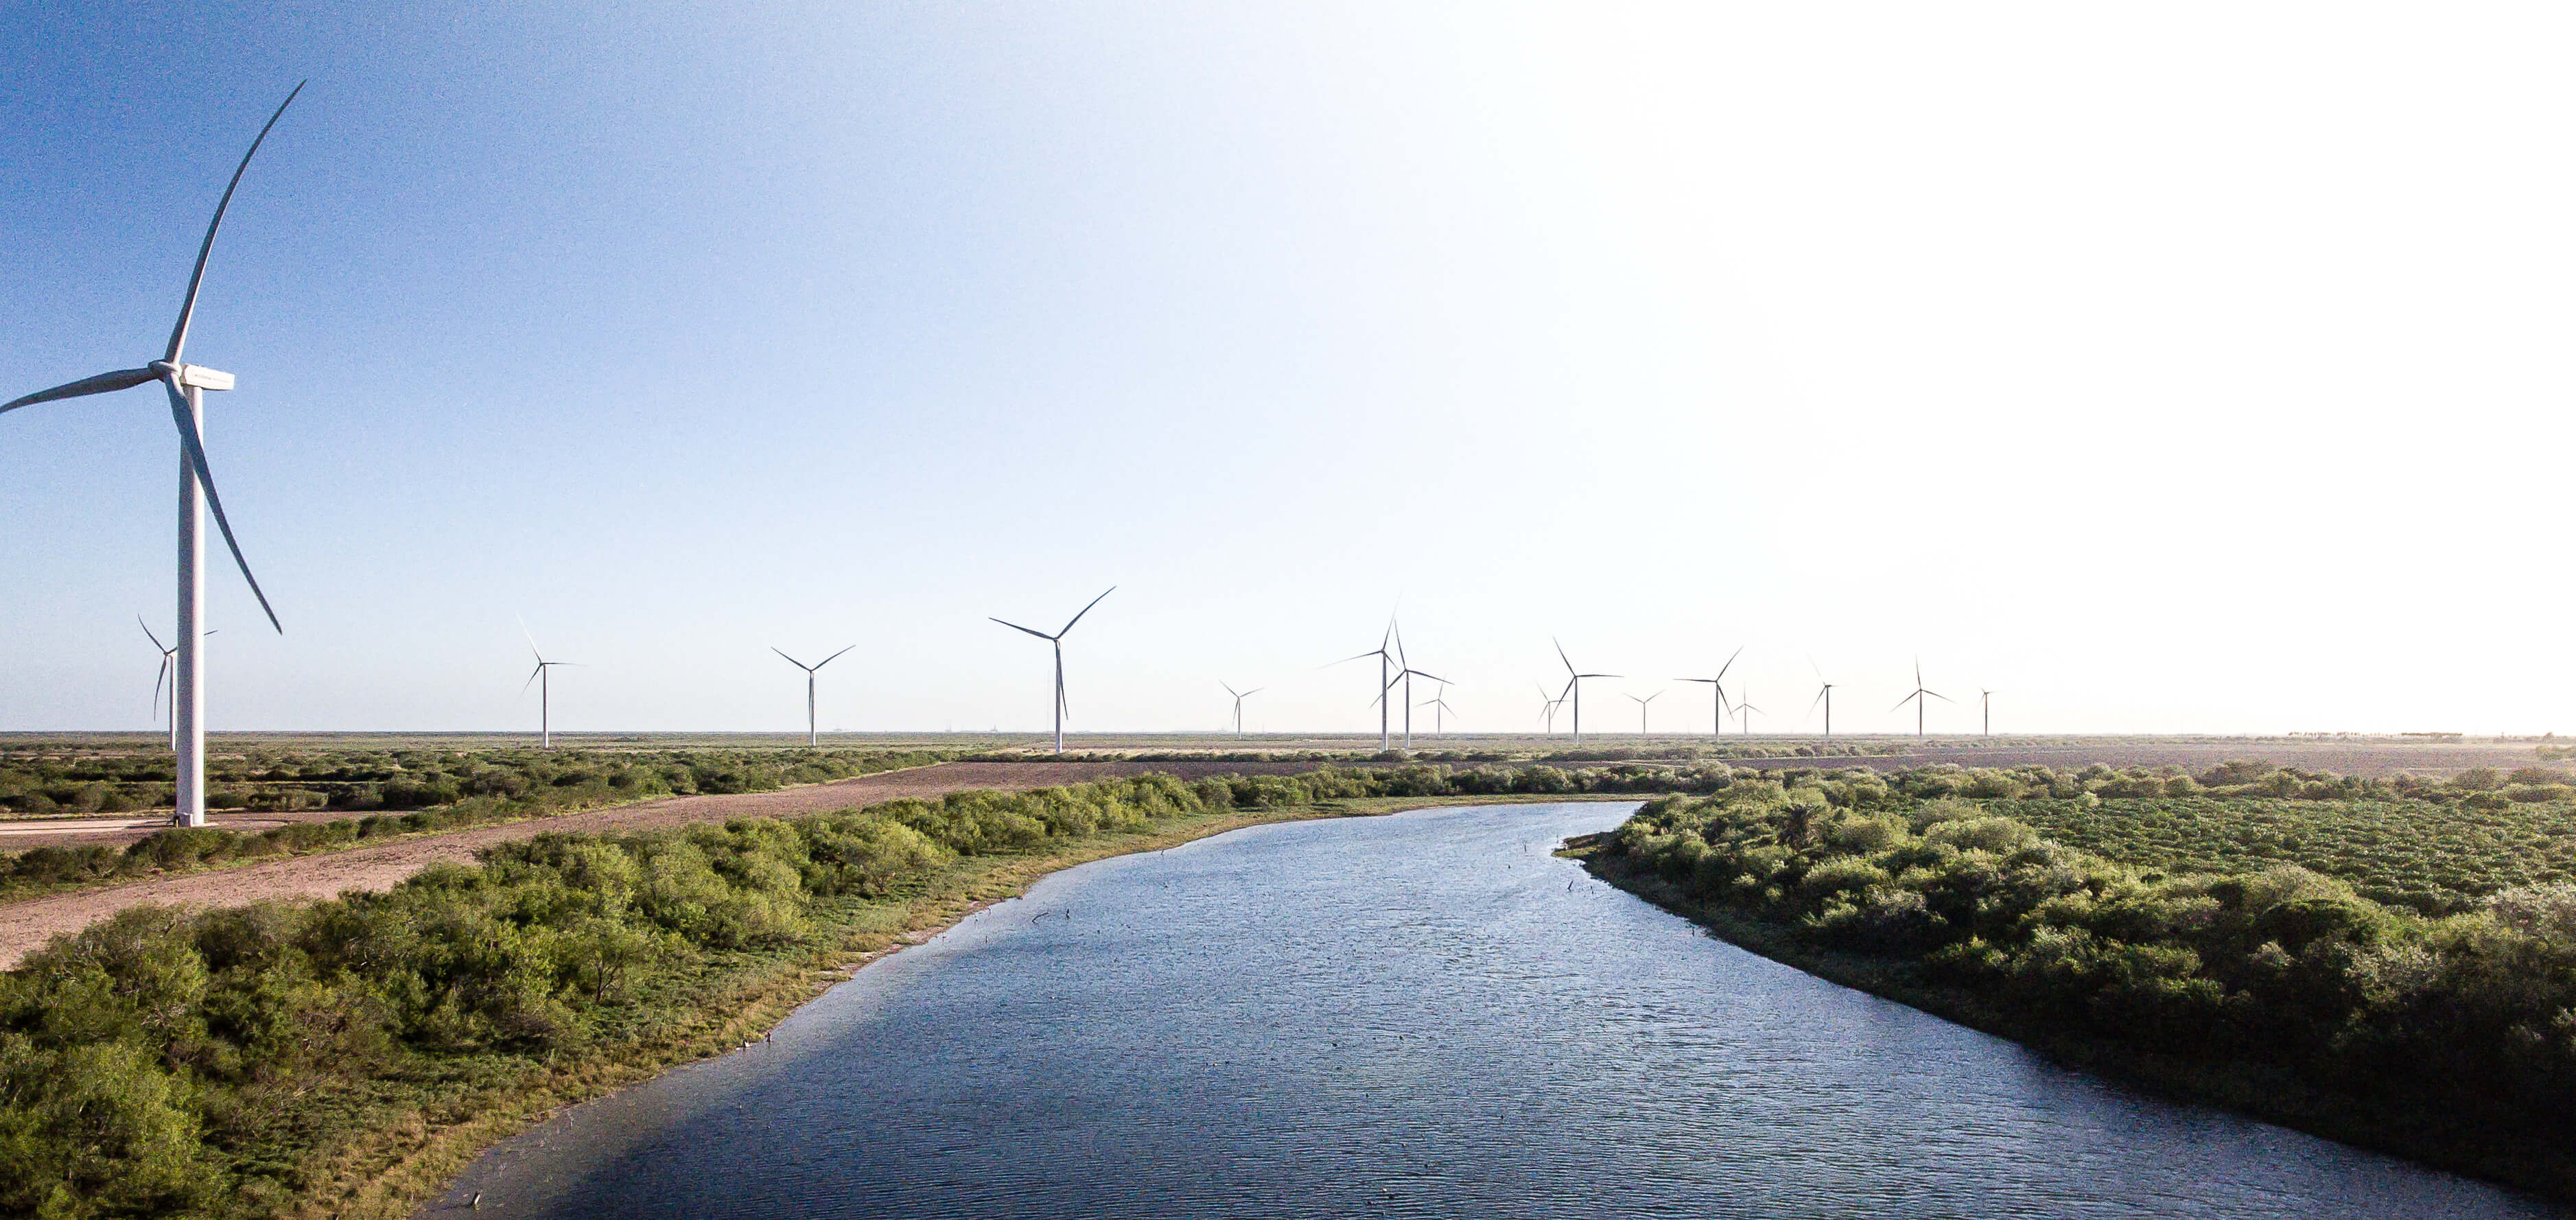 ACCIONA to build 145-MW wind farm in South Texas